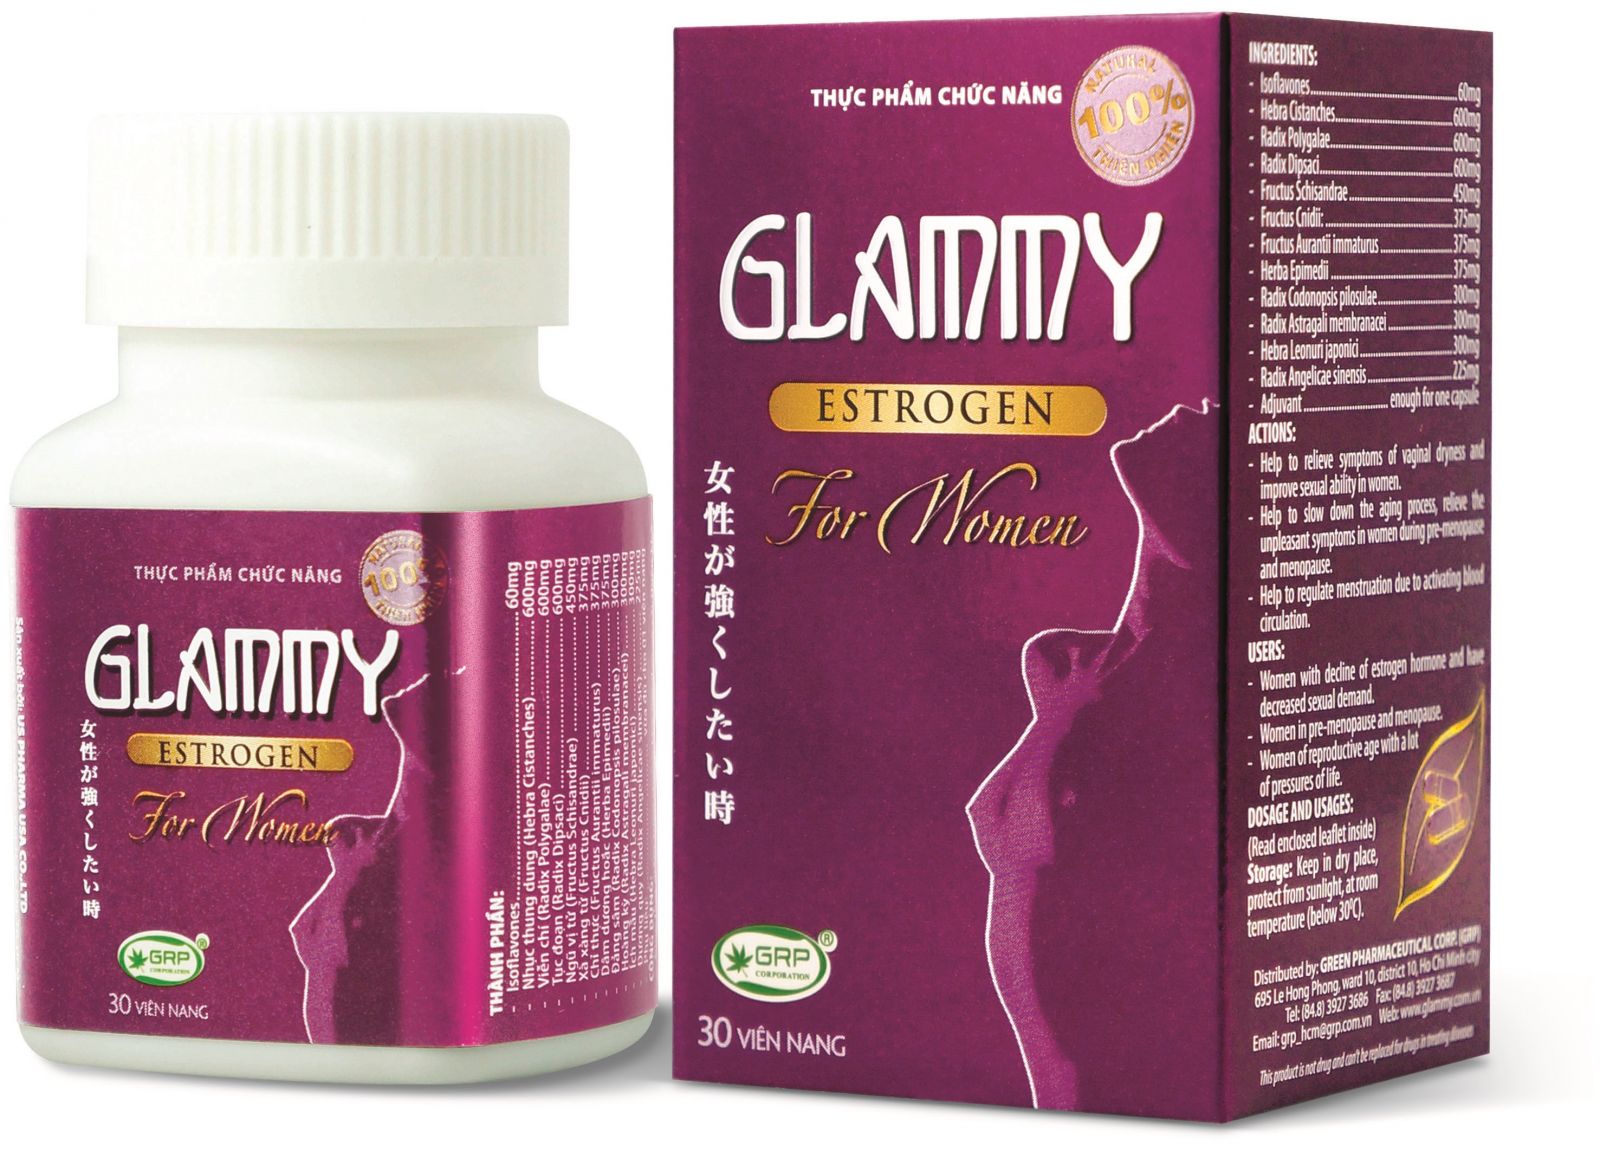 Glammy Estrogenz hộp 30 viên